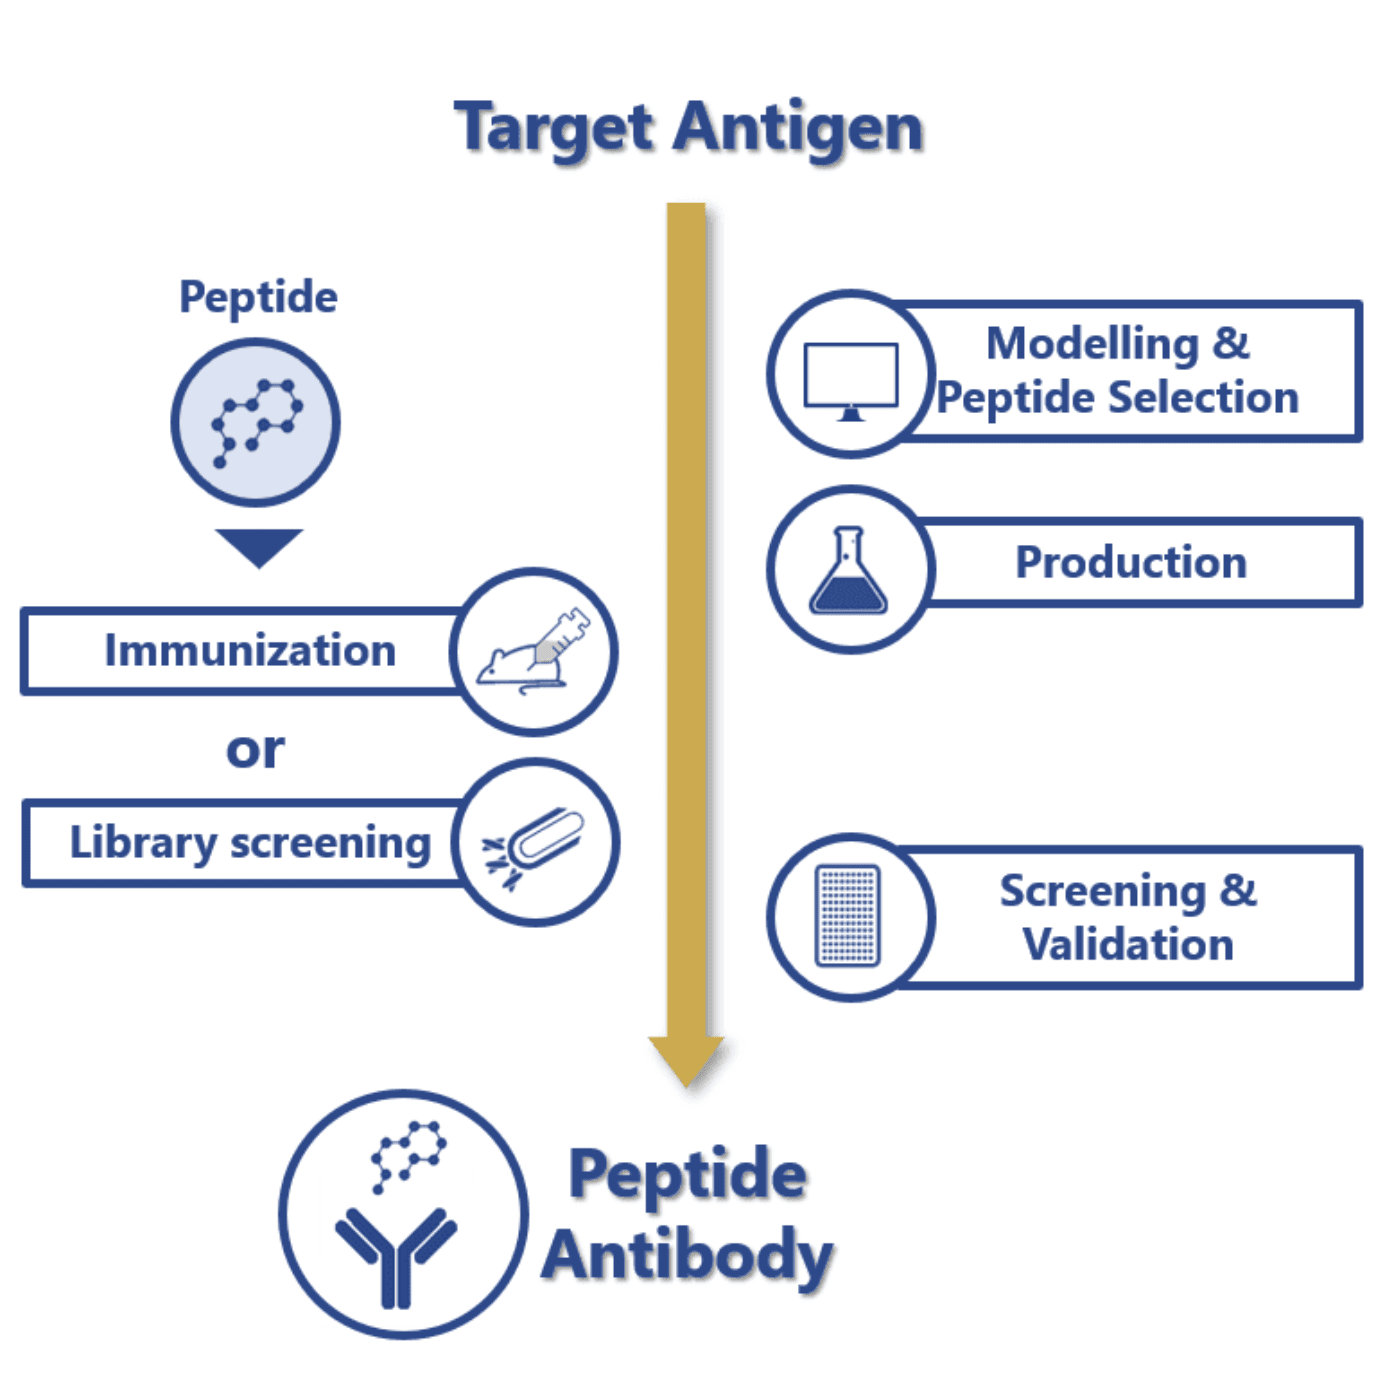 Peptide antibody